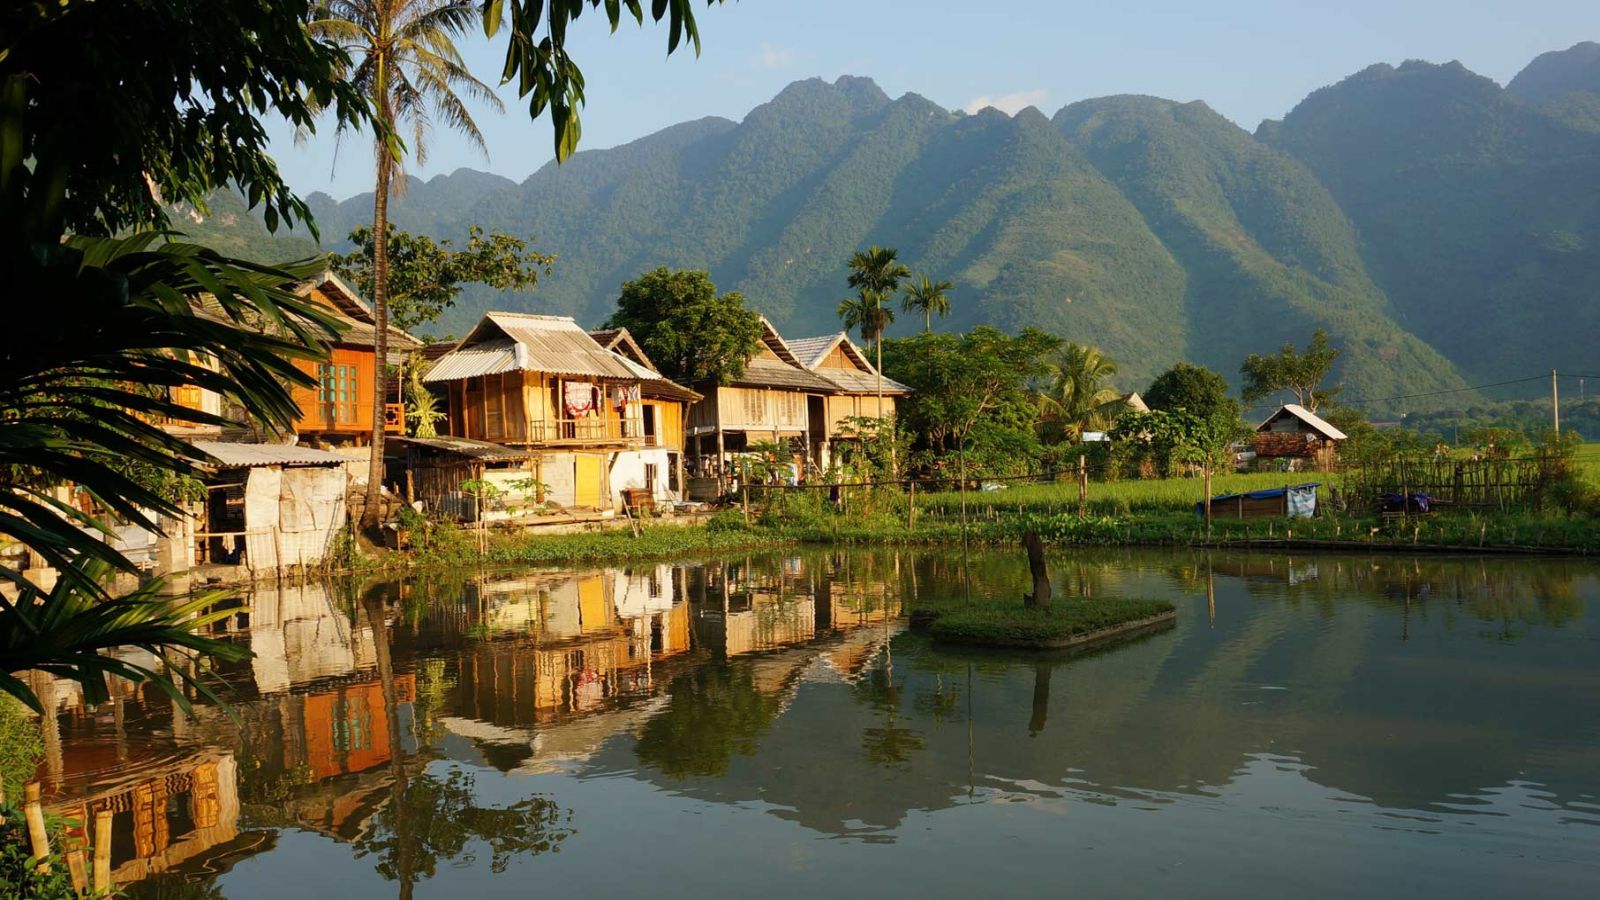 Poom Coong Village Mai Chau Valley Vietnam travel 